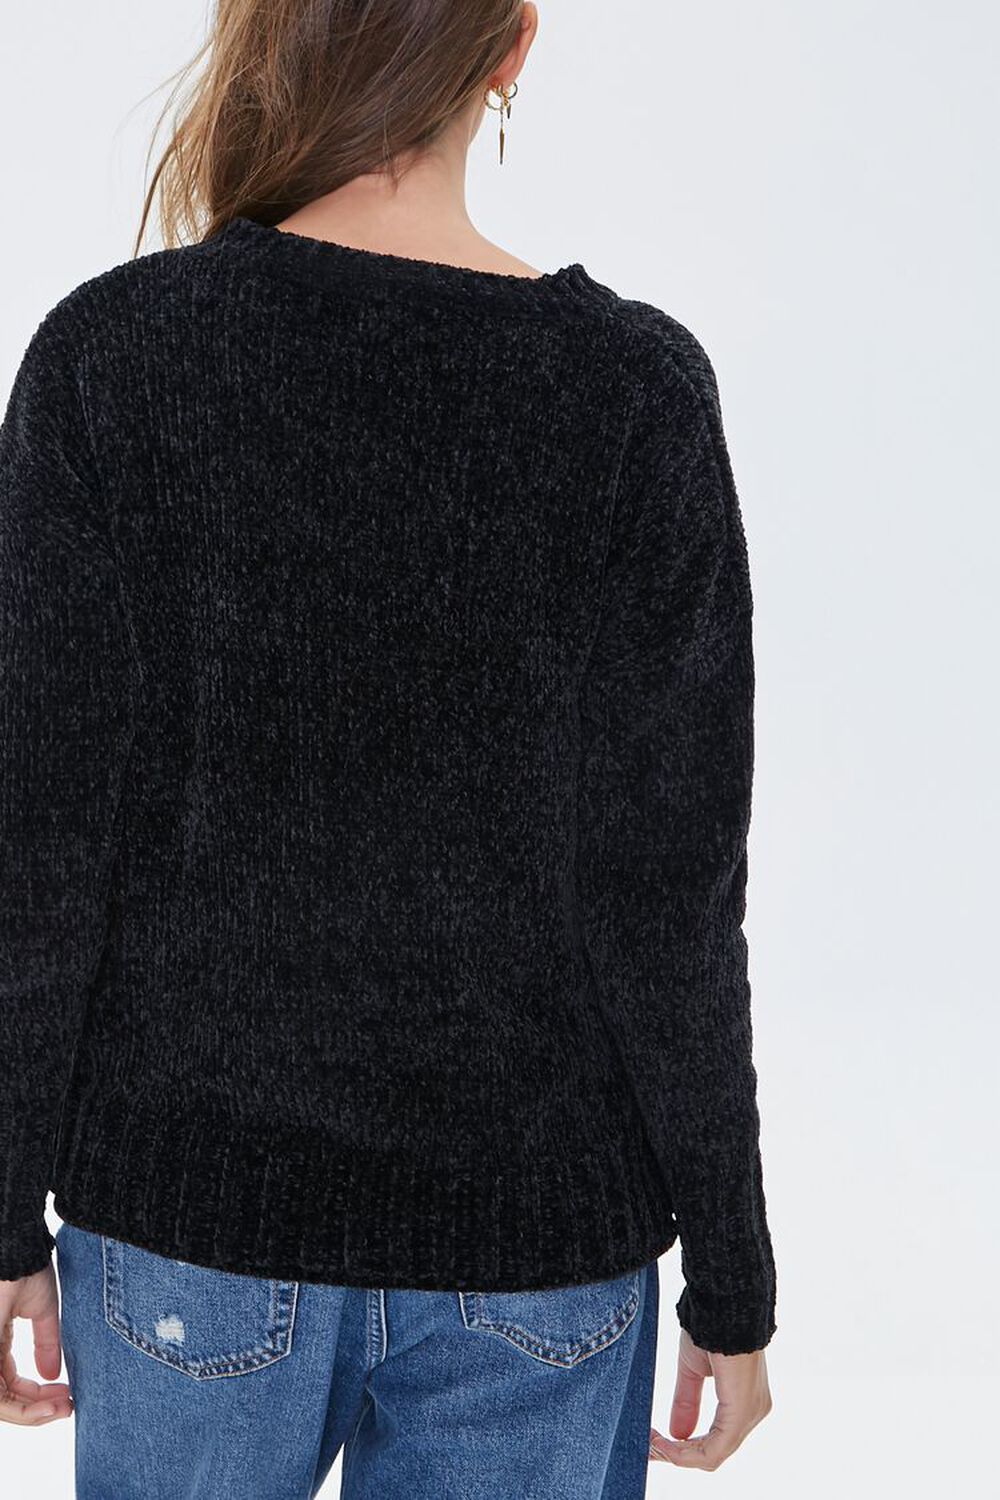 BLACK Chenille Drop-Sleeve Sweater, image 3